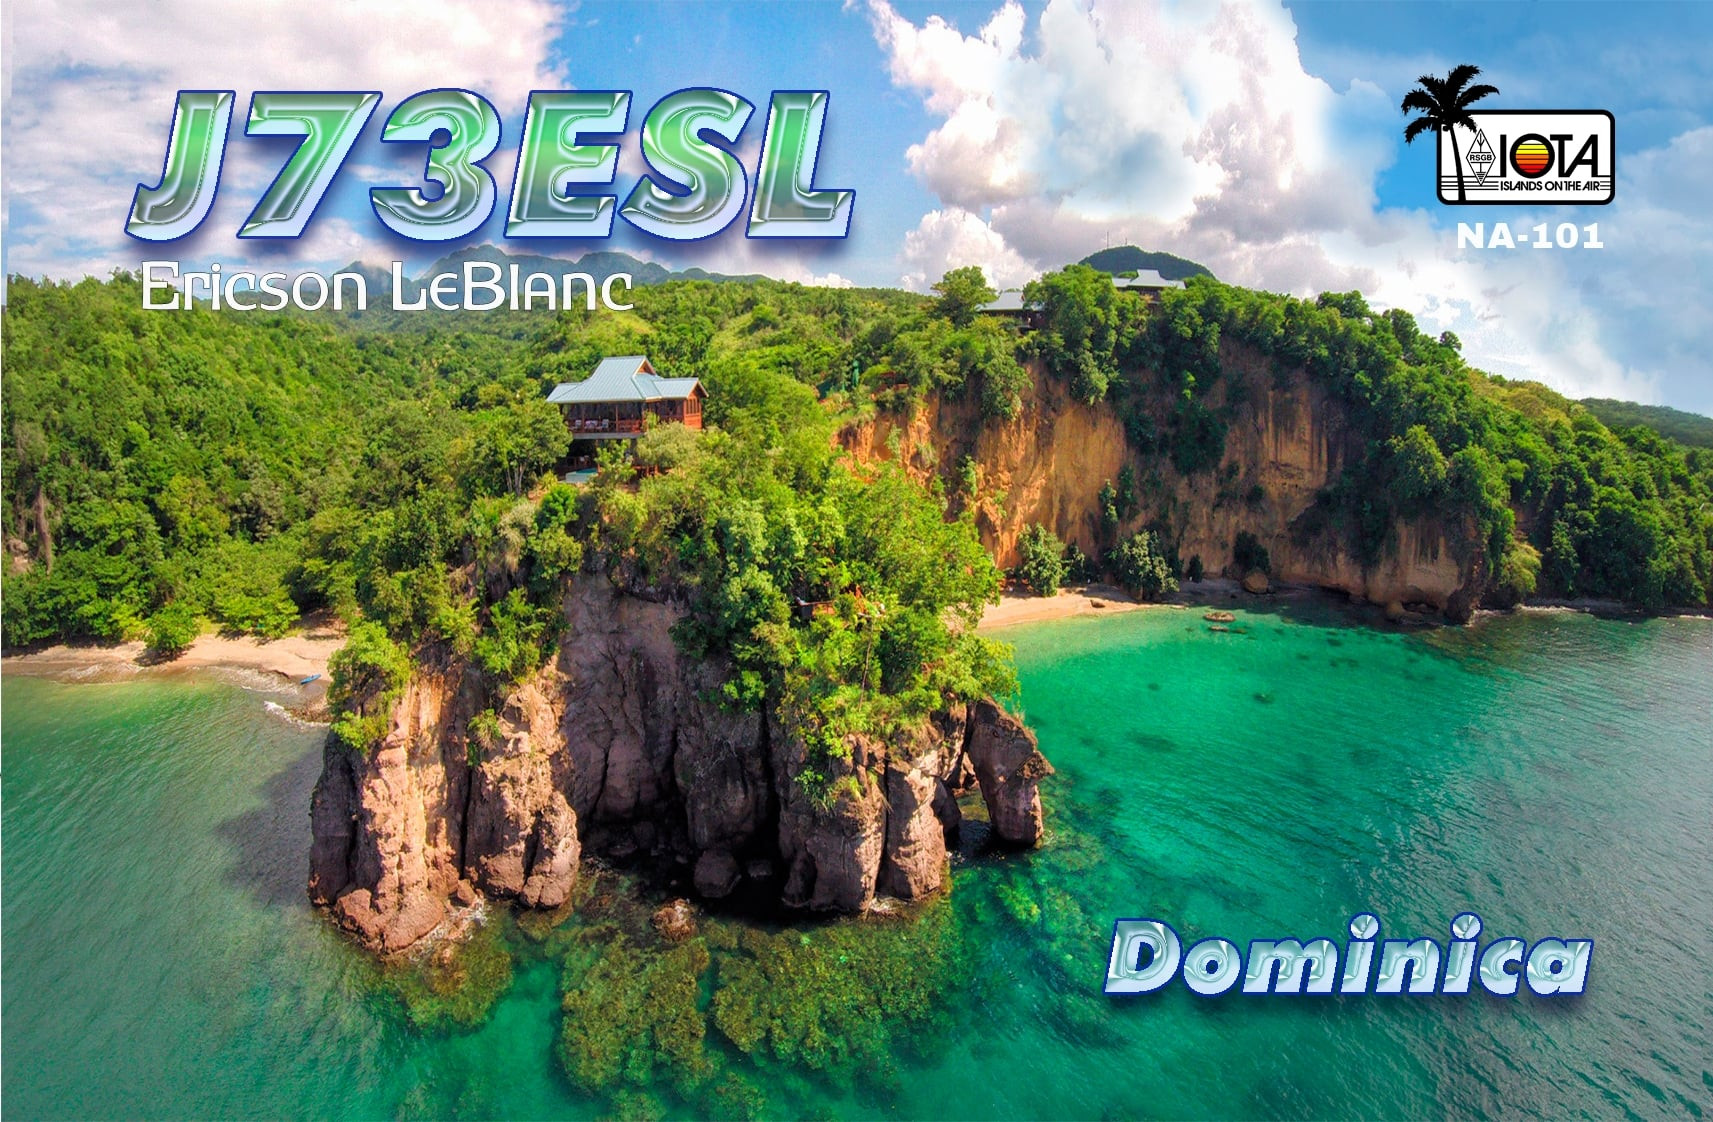 J73ESL Porstmouth, Dominica Island QSL Card